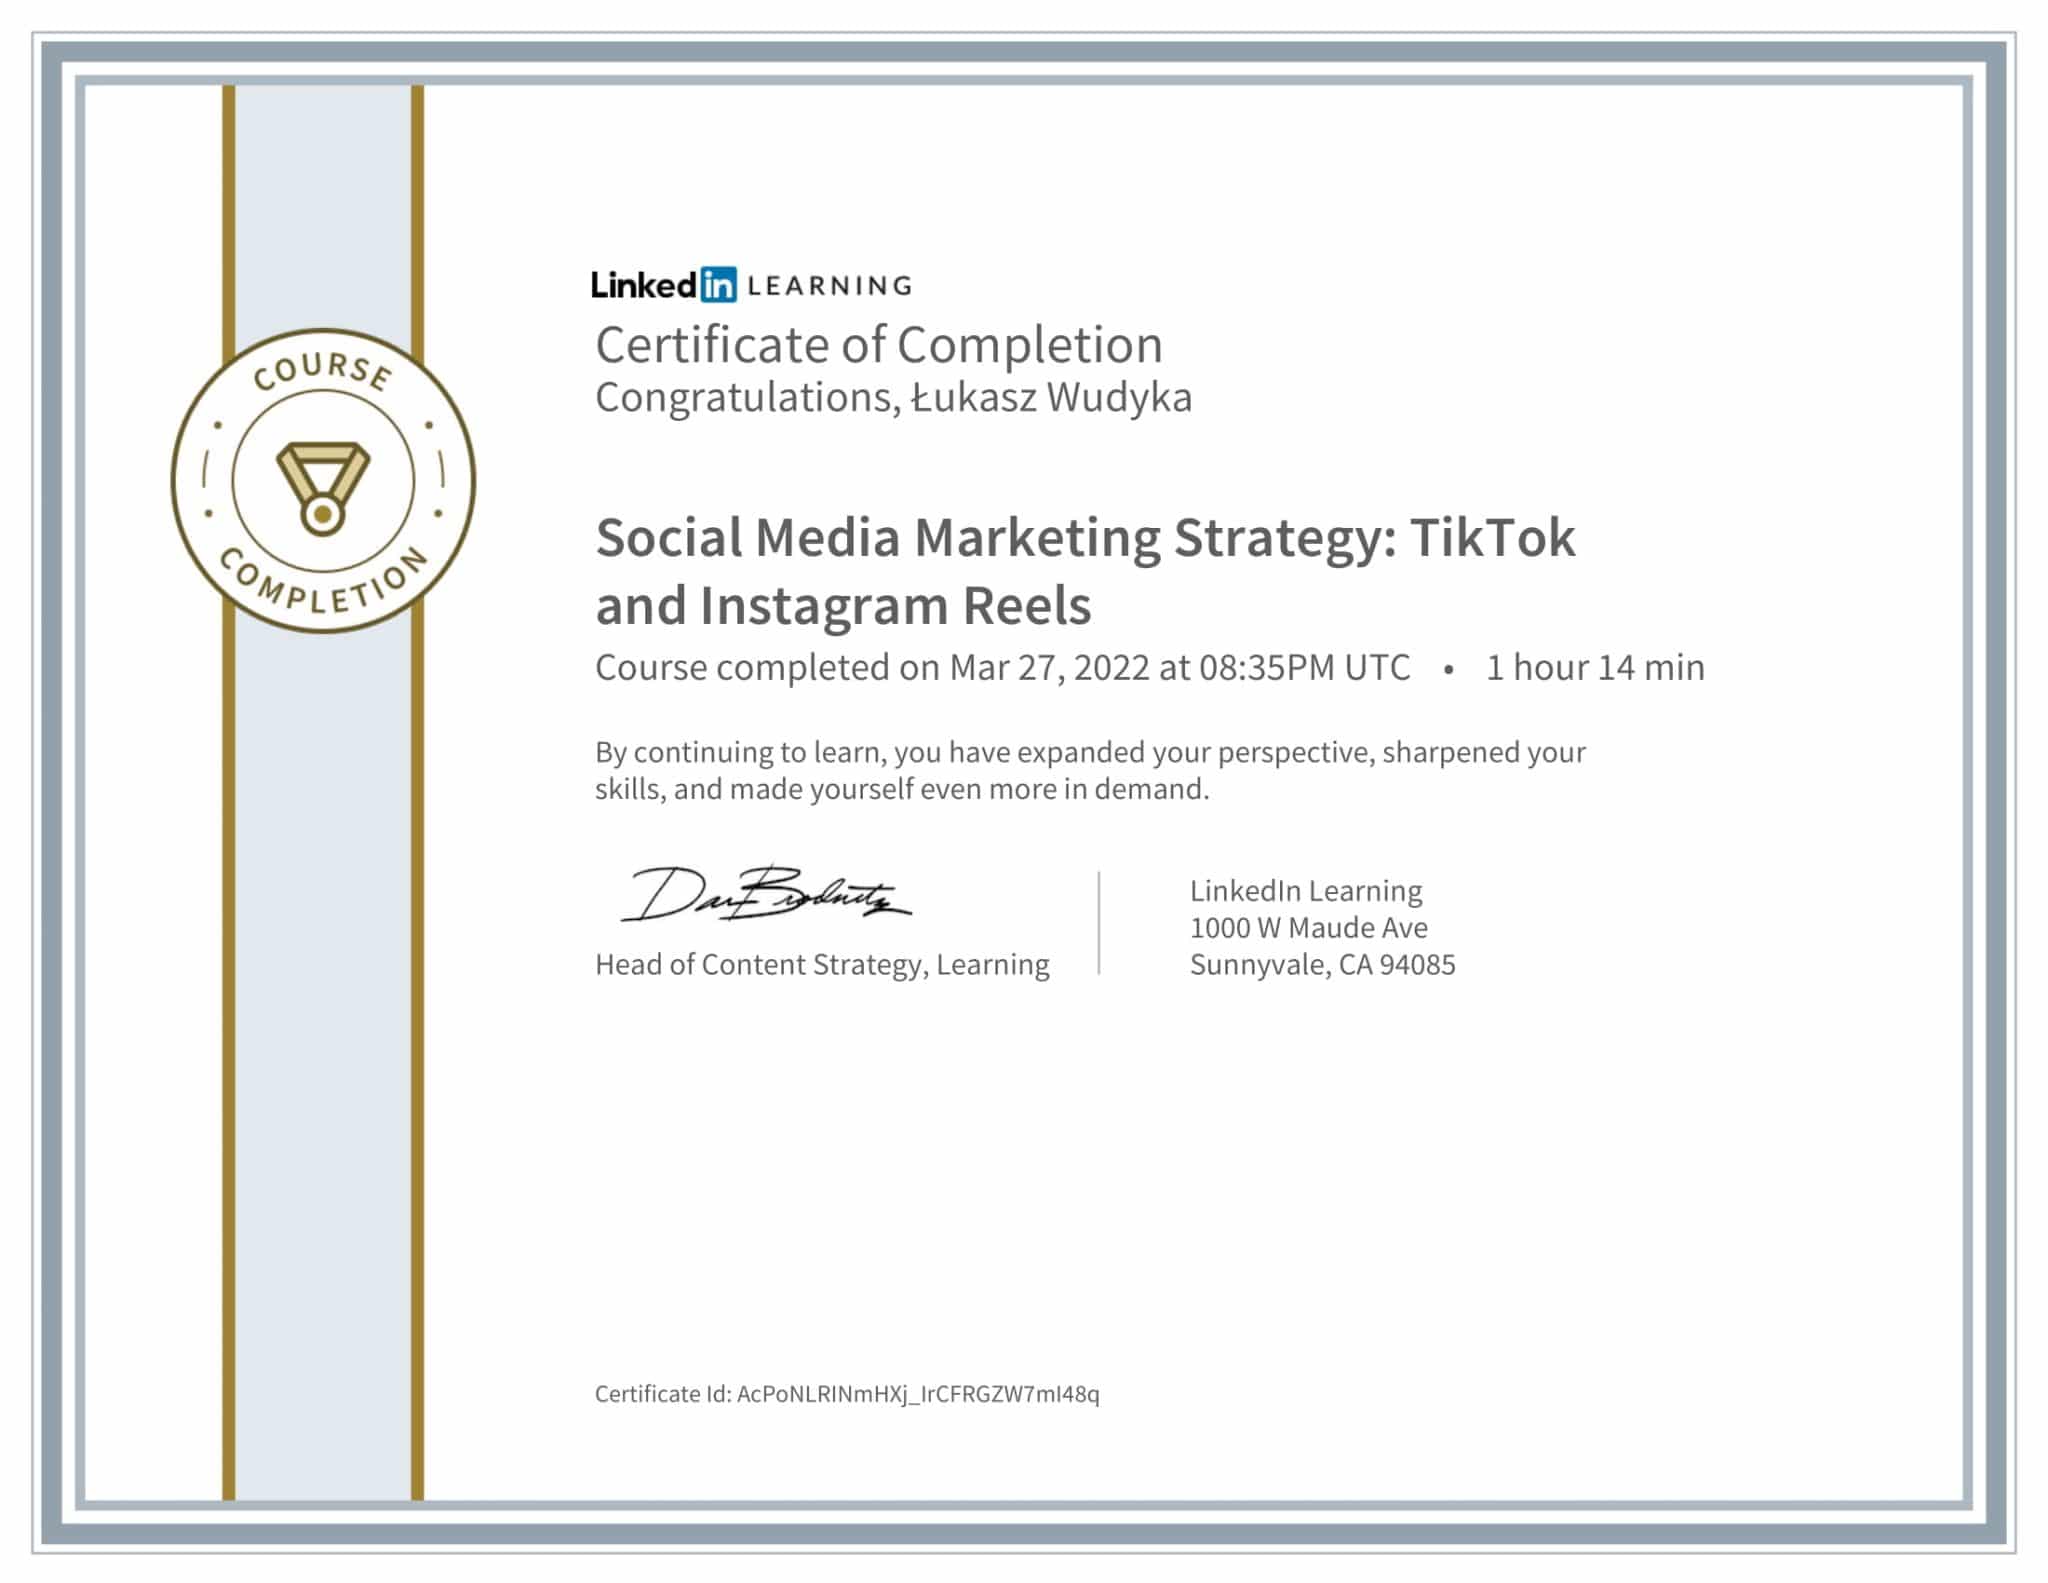 CertificateOfCompletion_Social Media Marketing Strategy TikTok and Instagram Reels-1